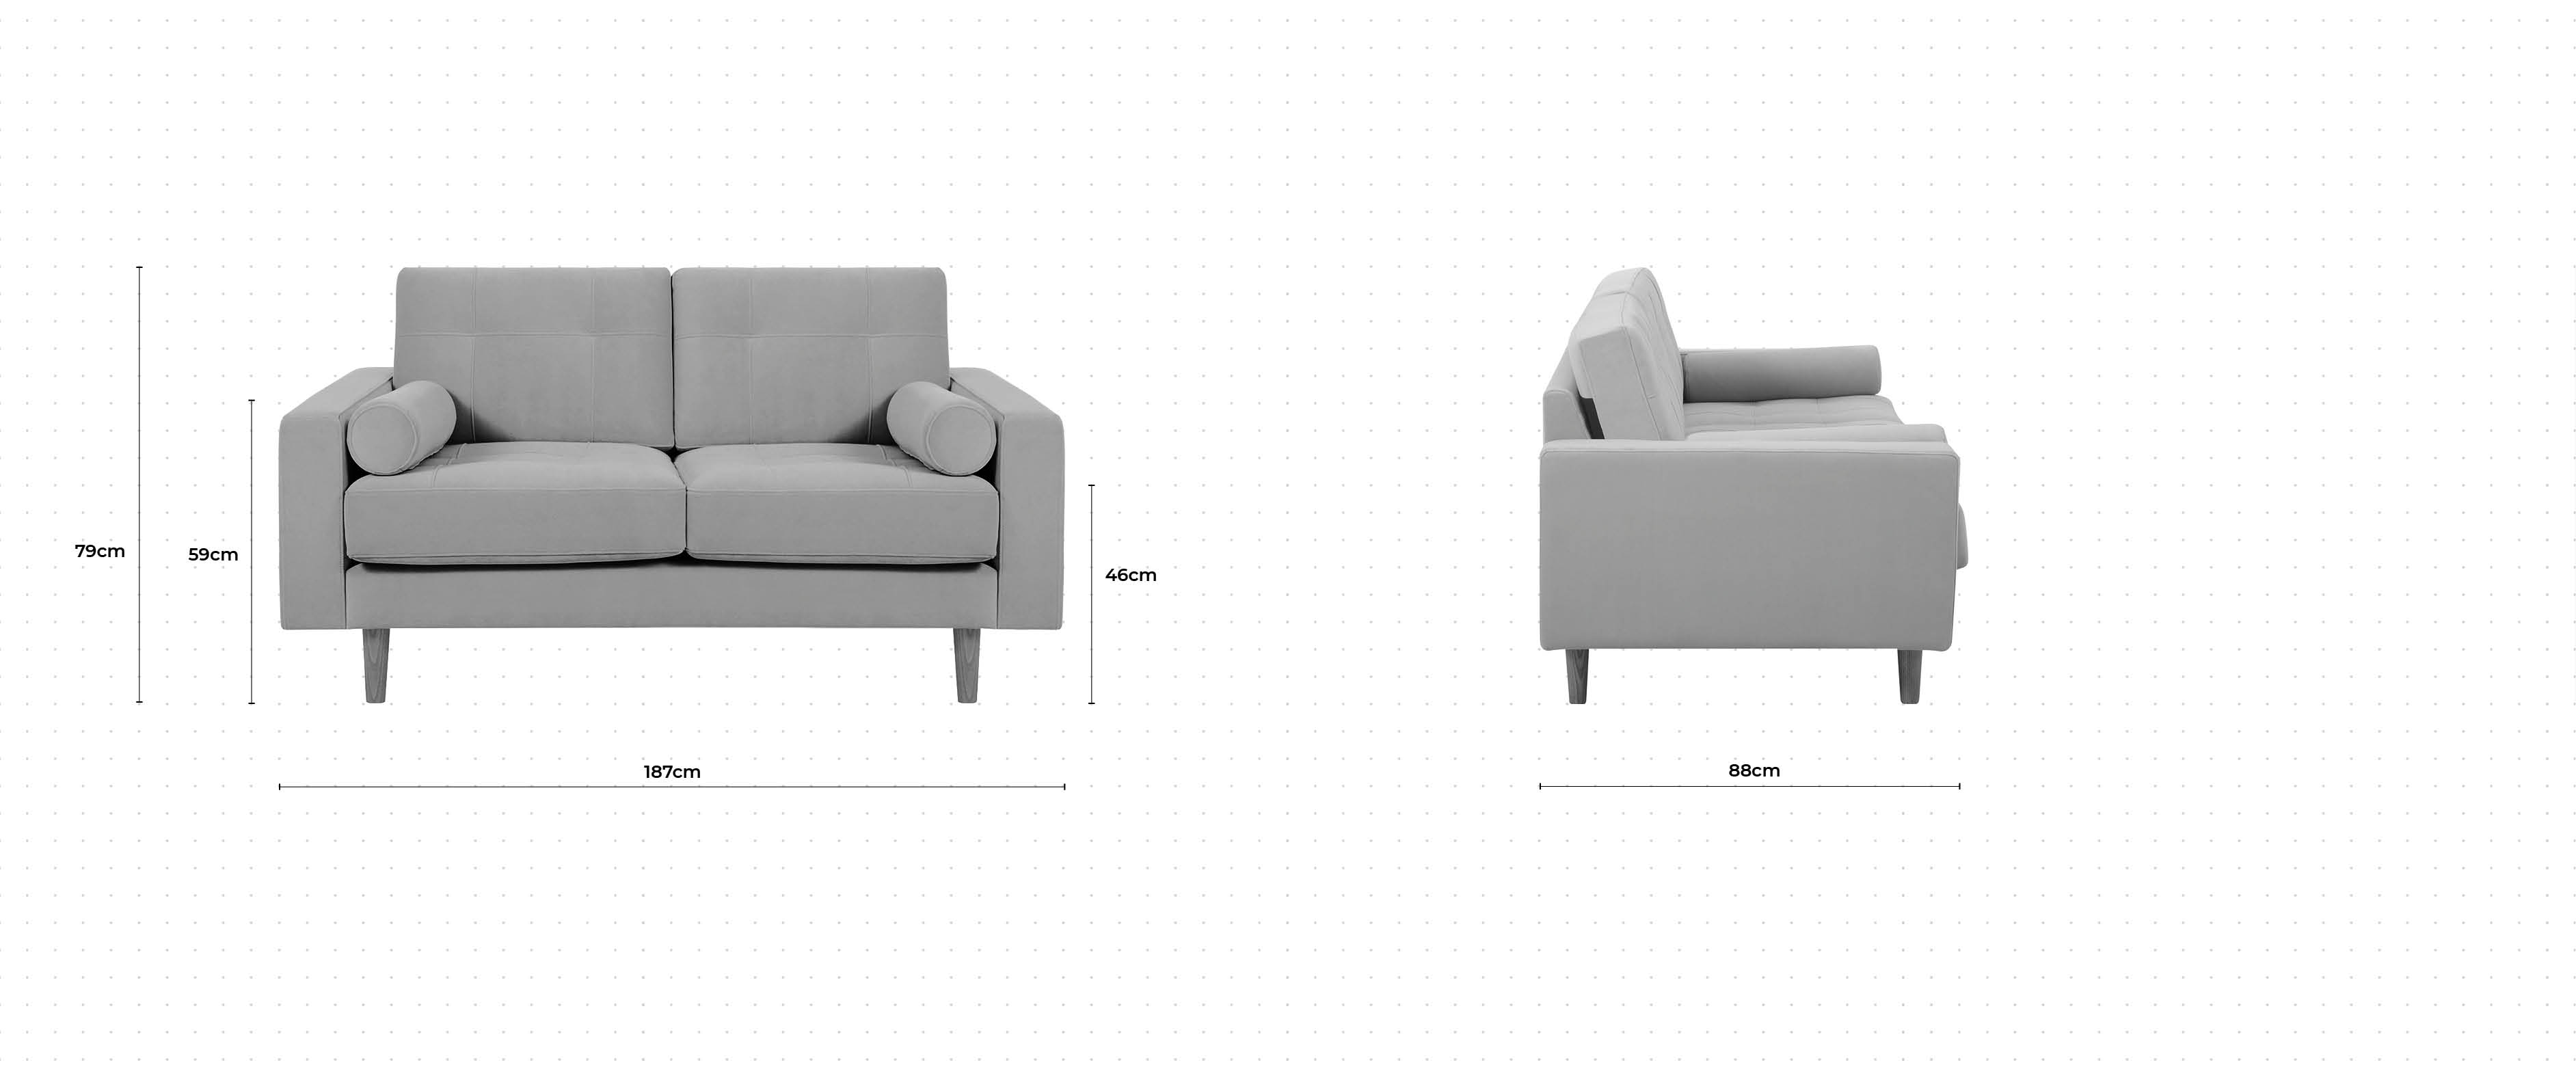 Caufield 2 Seater Sofa dimensions